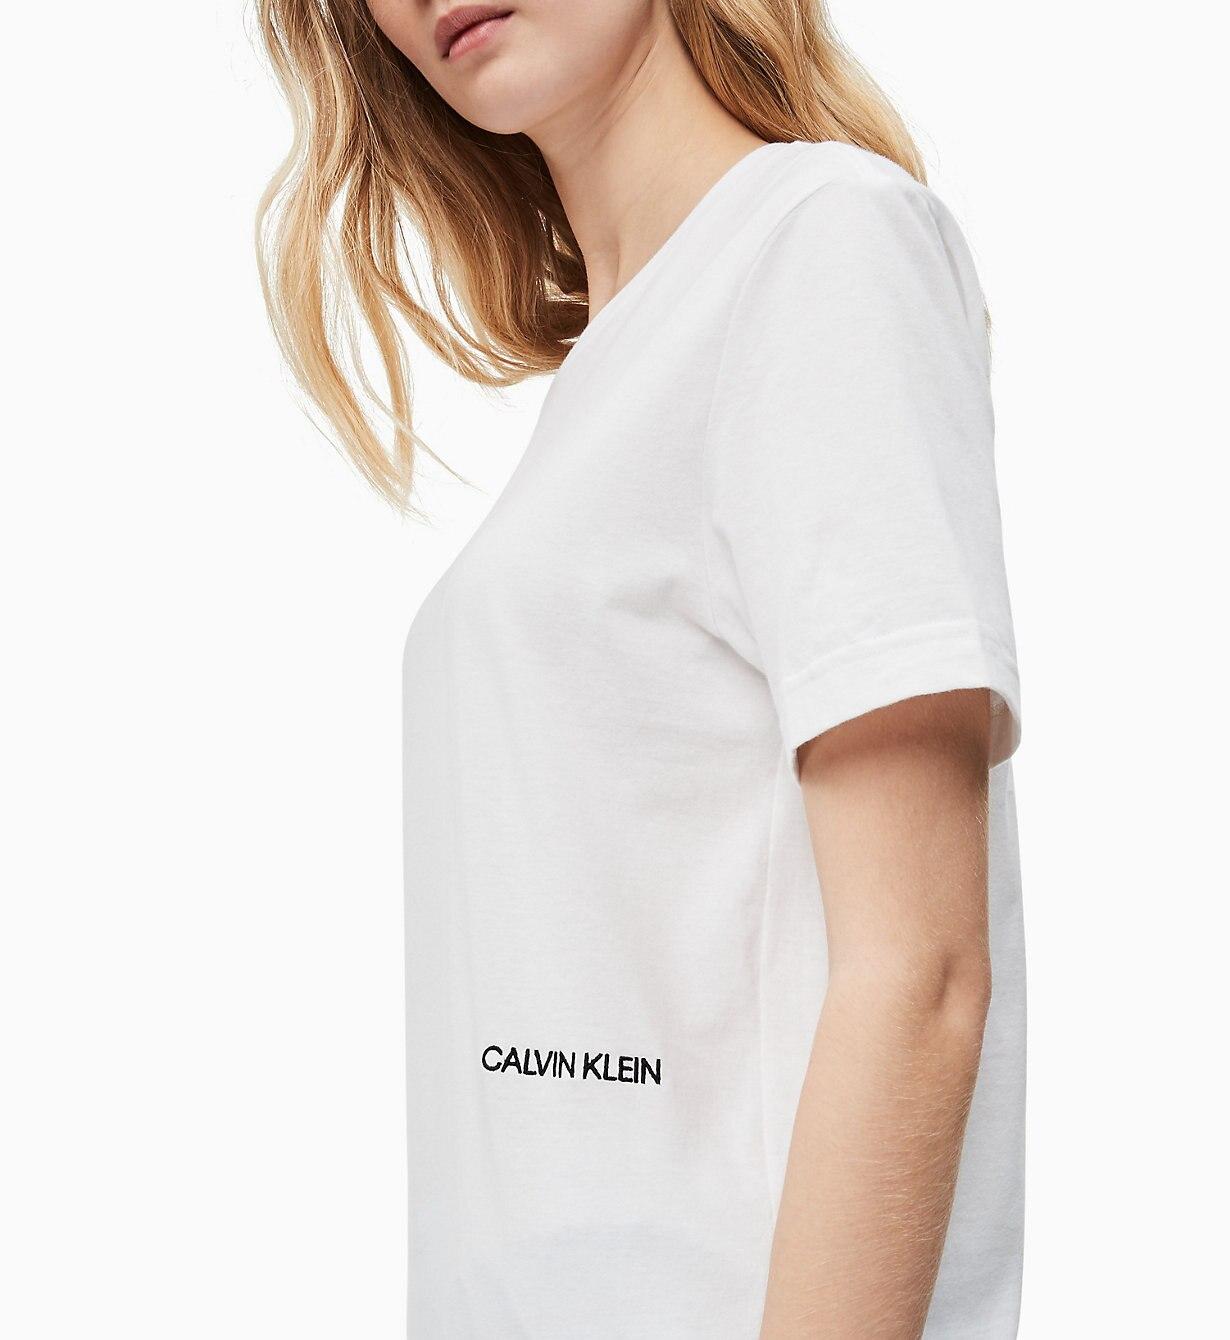 Calvin Klein Cotton 2 Pack Lounge T-shirts - Statement 1981 in White - Lyst